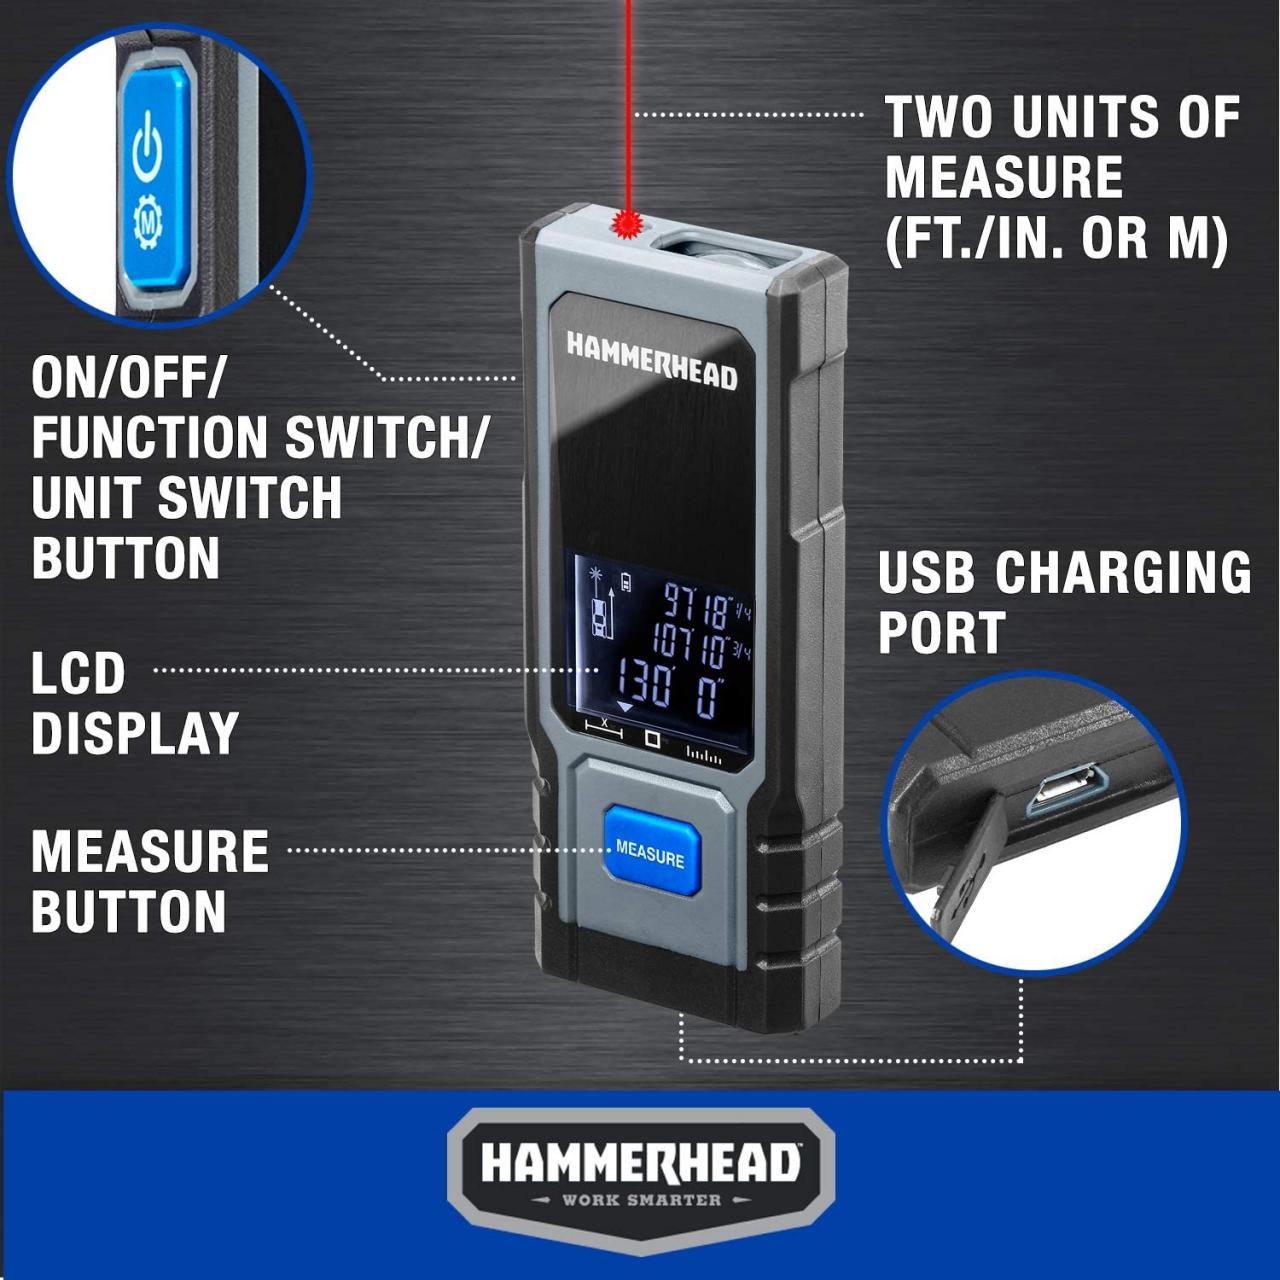 Buy Hammerhead Rechargeable Compact 130ft Laser Measuring Tool - HLMT130  Online in Vietnam. B0719CZ6RM